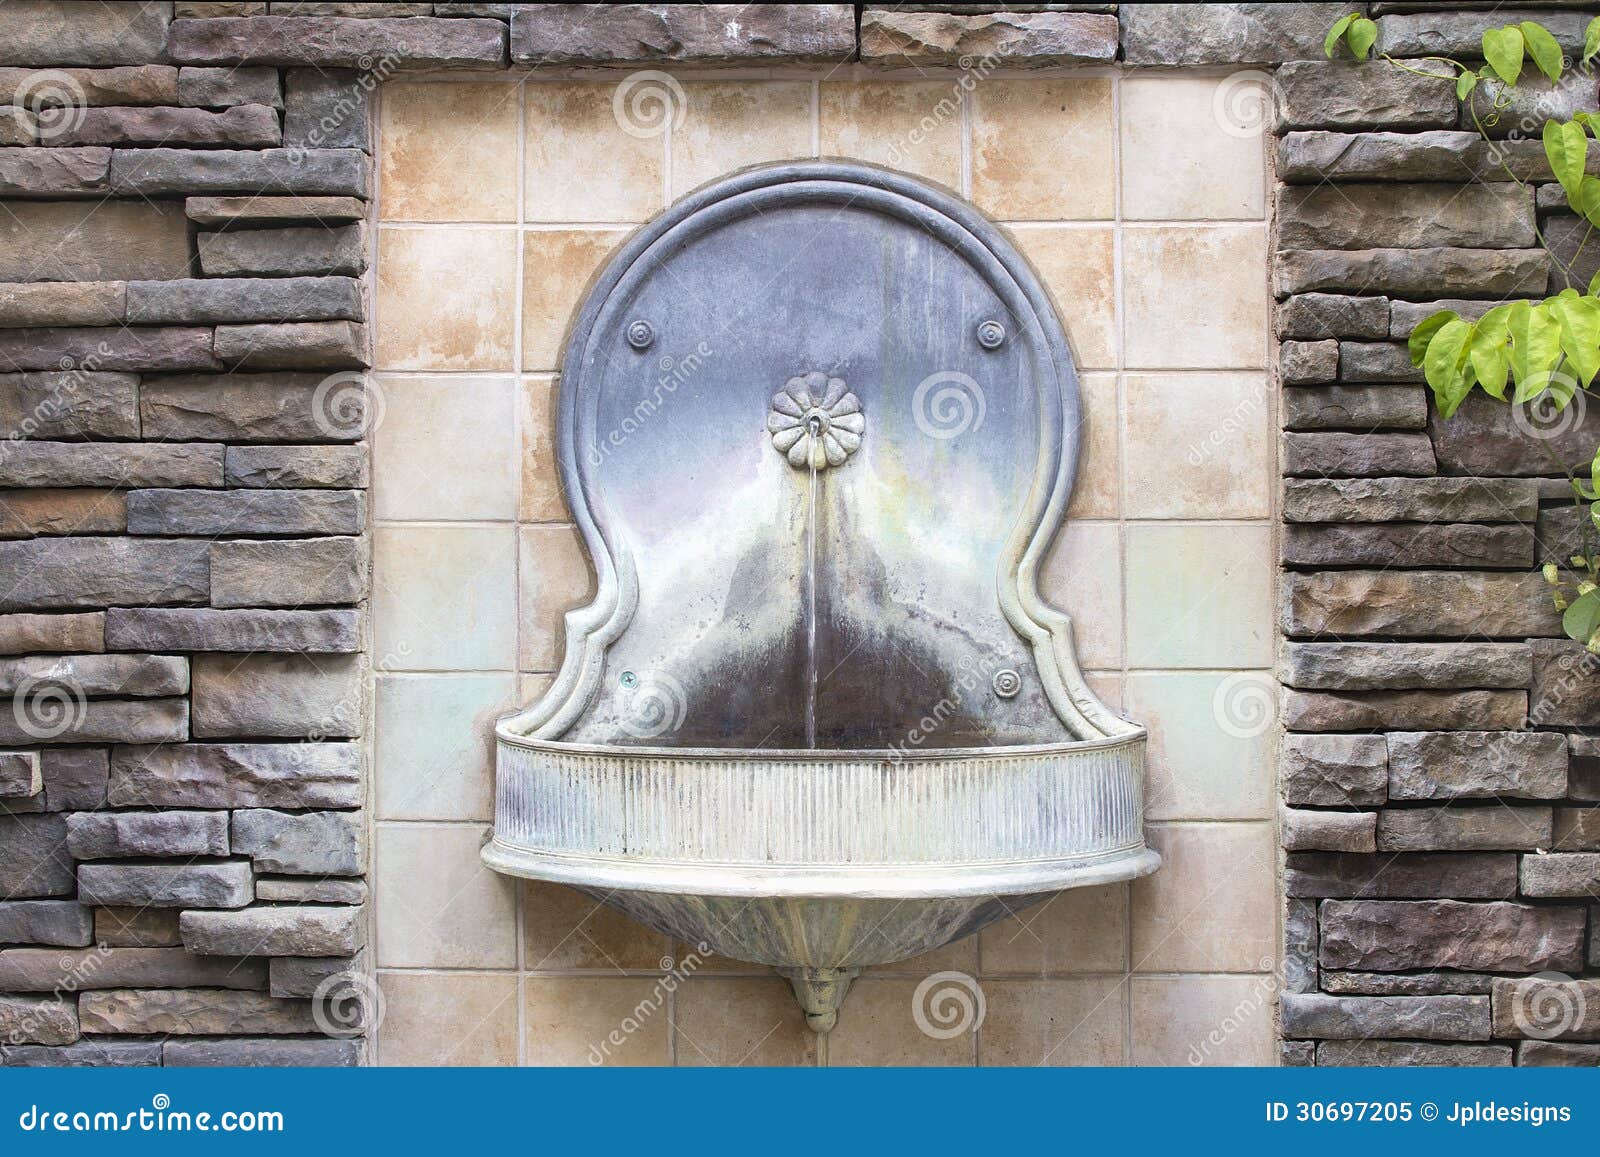 tuscan style wall water fountain horizontal